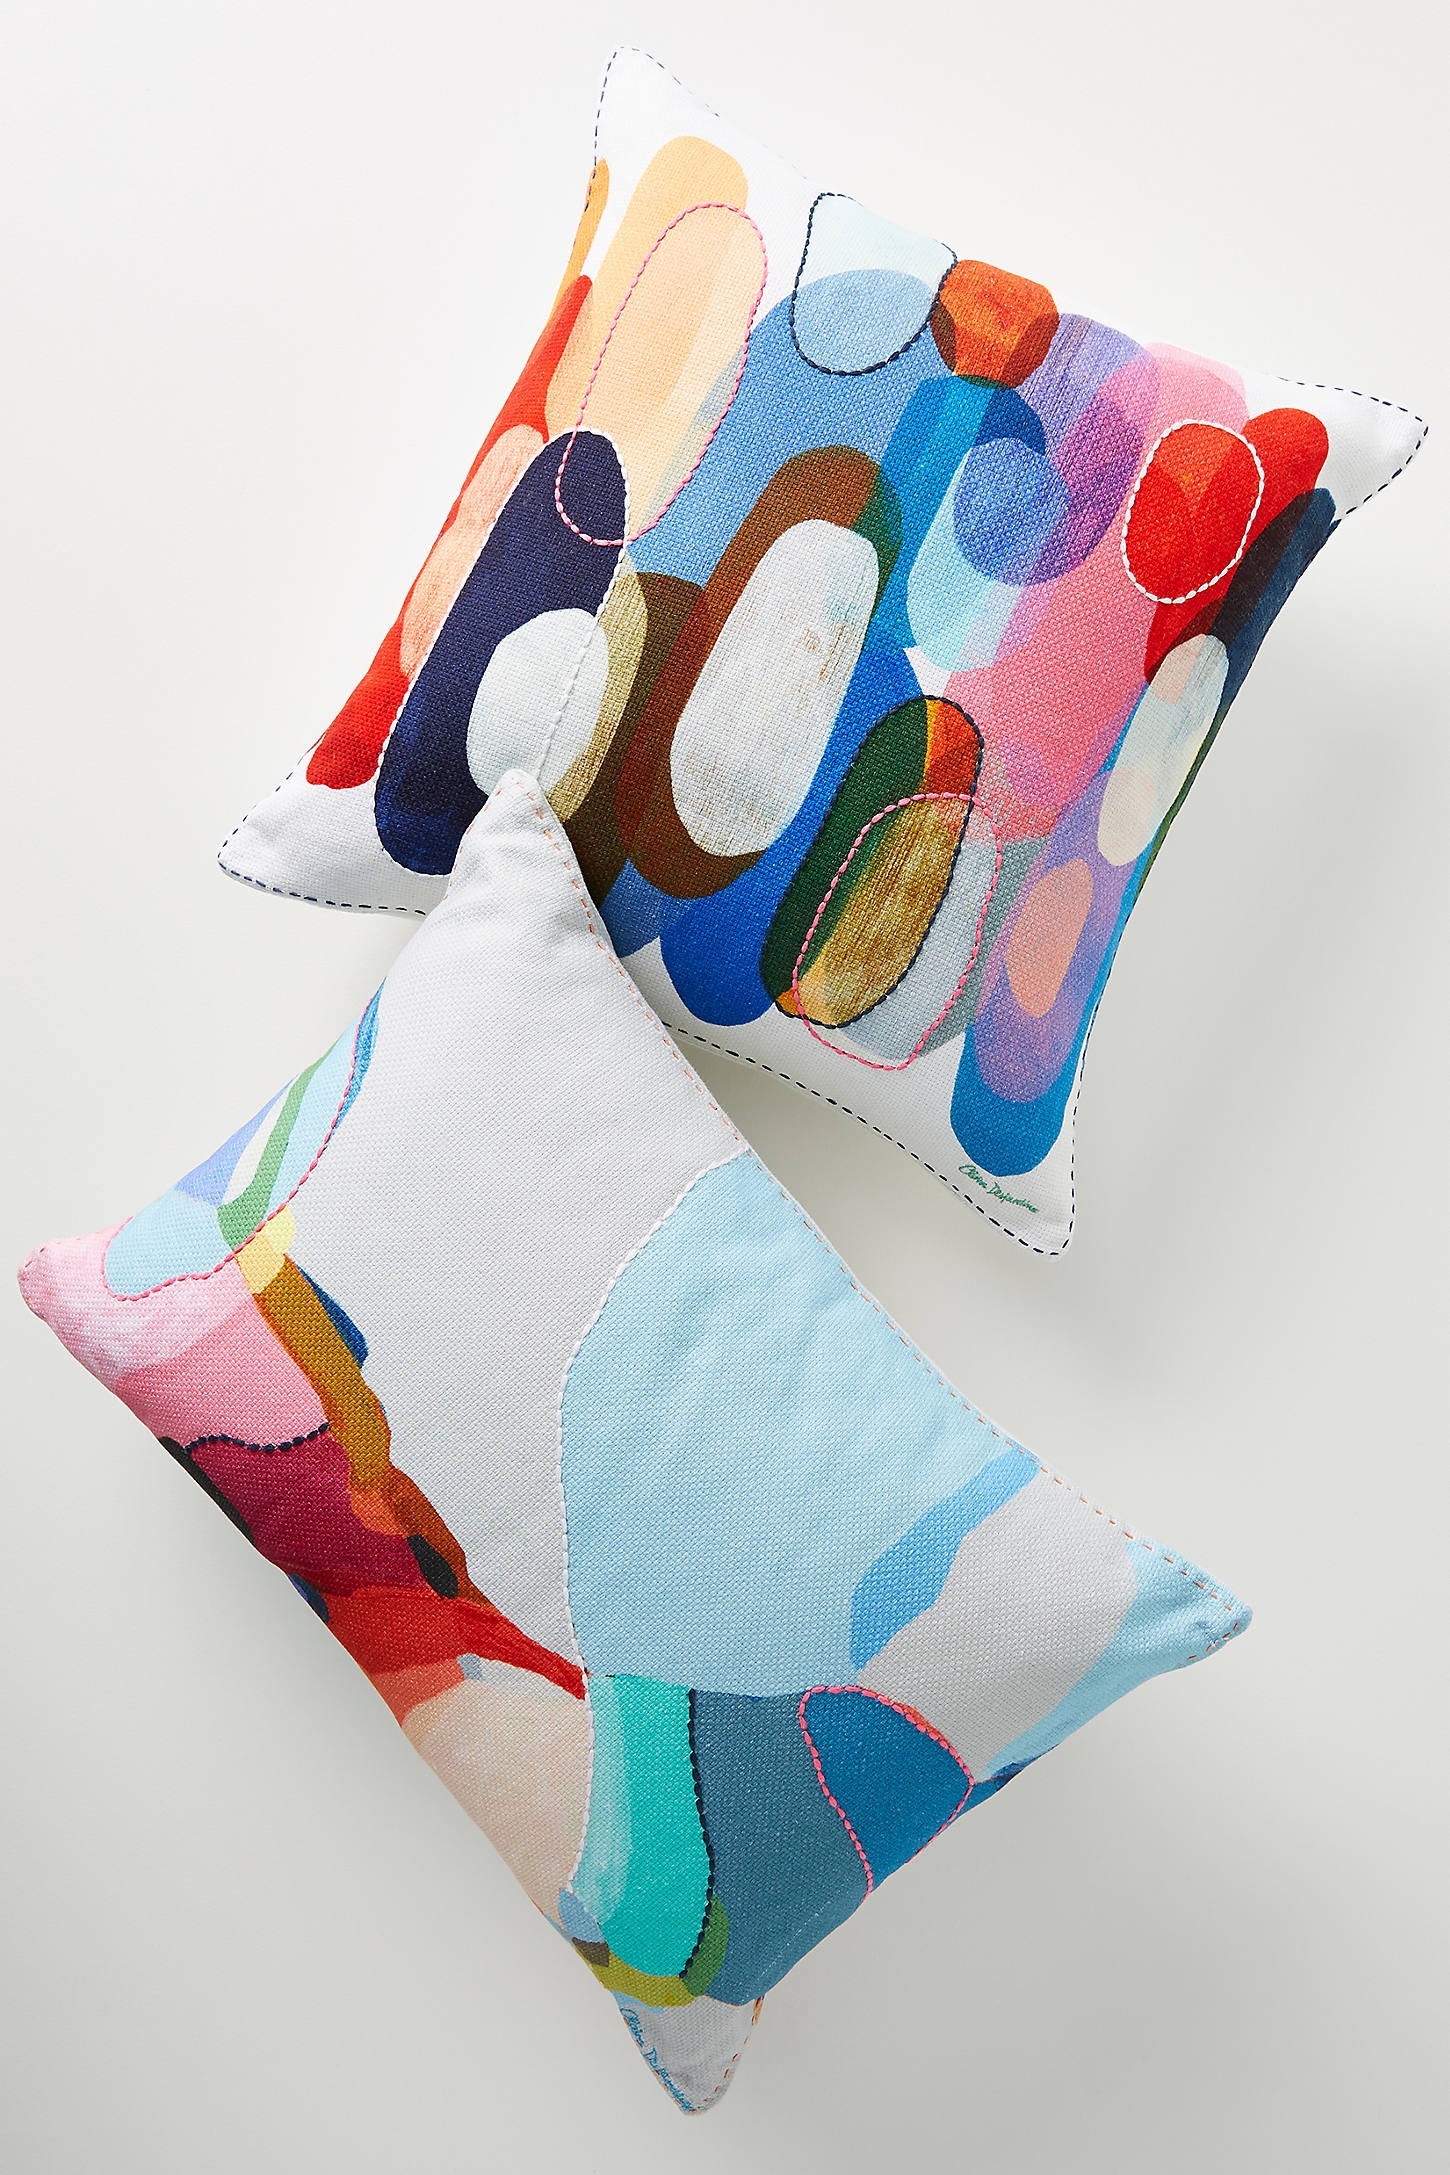 Claire Desjardins Kaleidoscope Pillow - Image 1